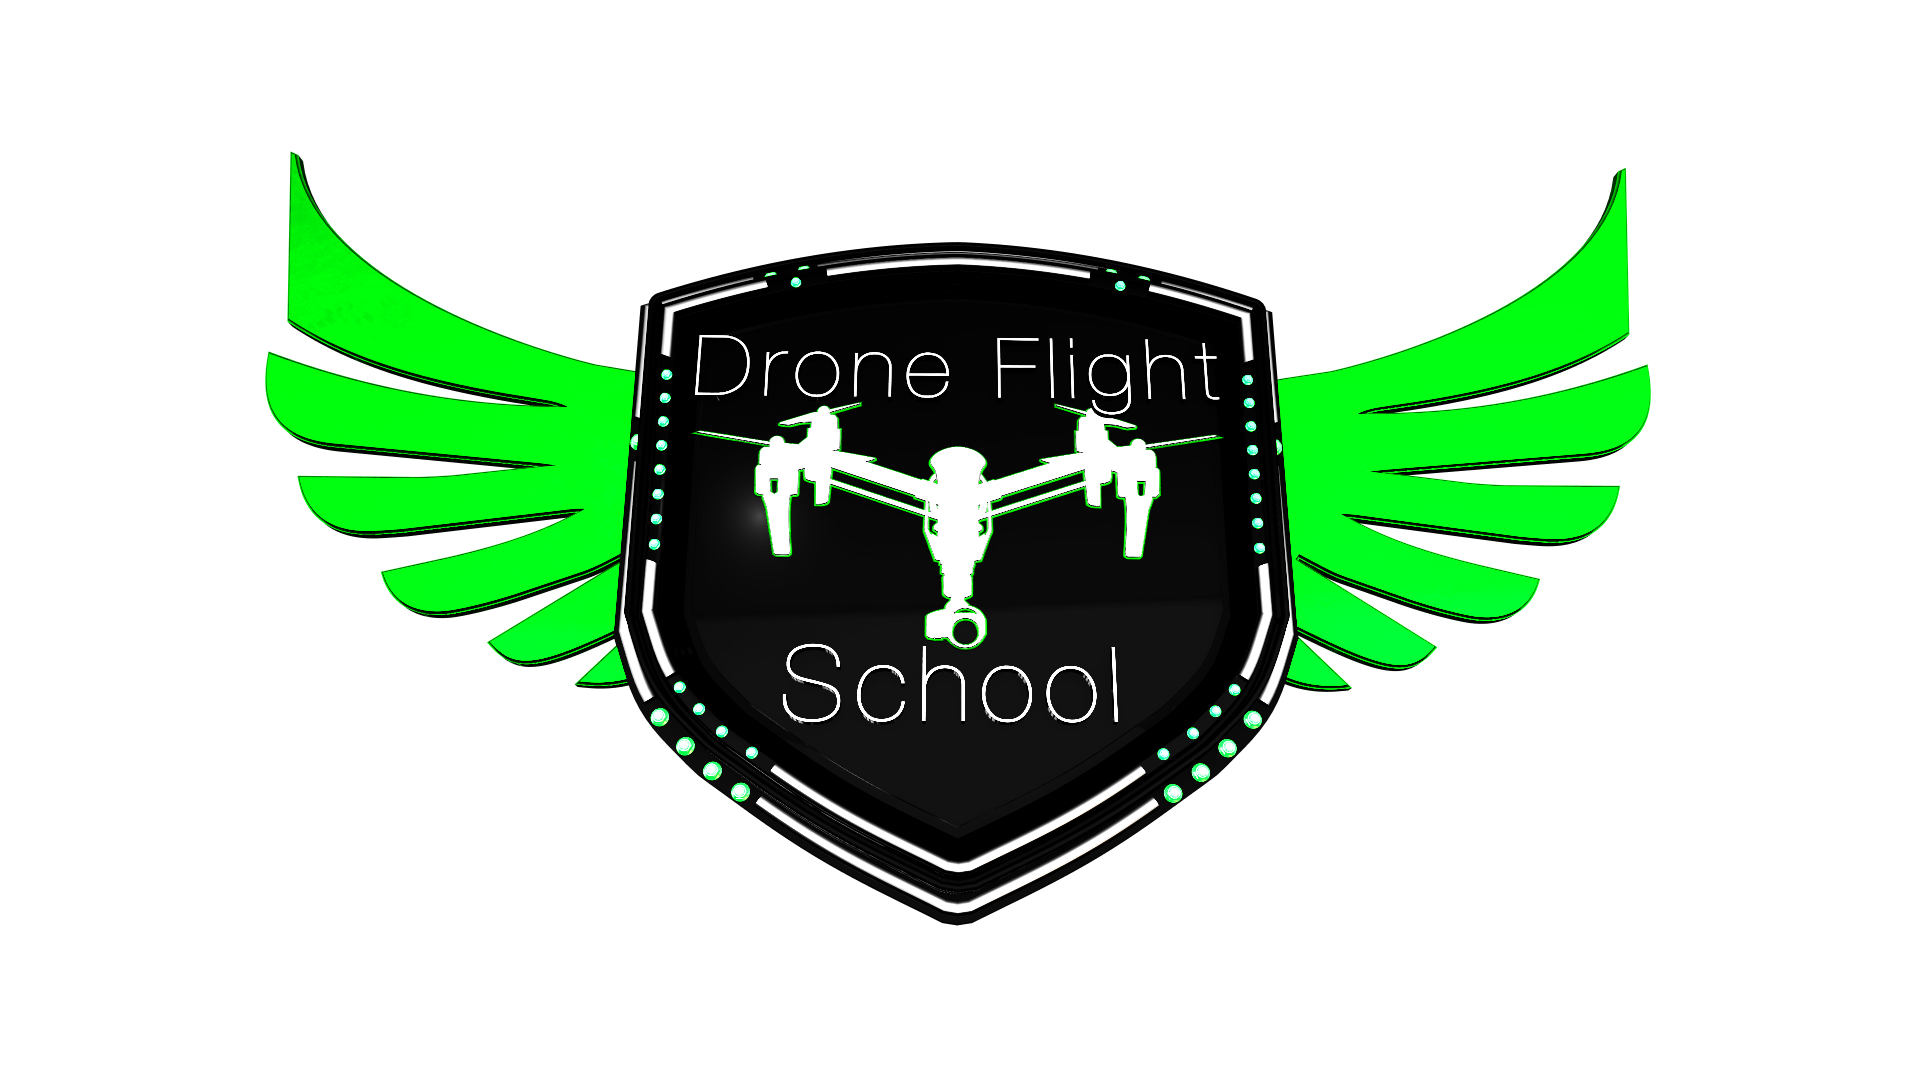 The Drone Flight School